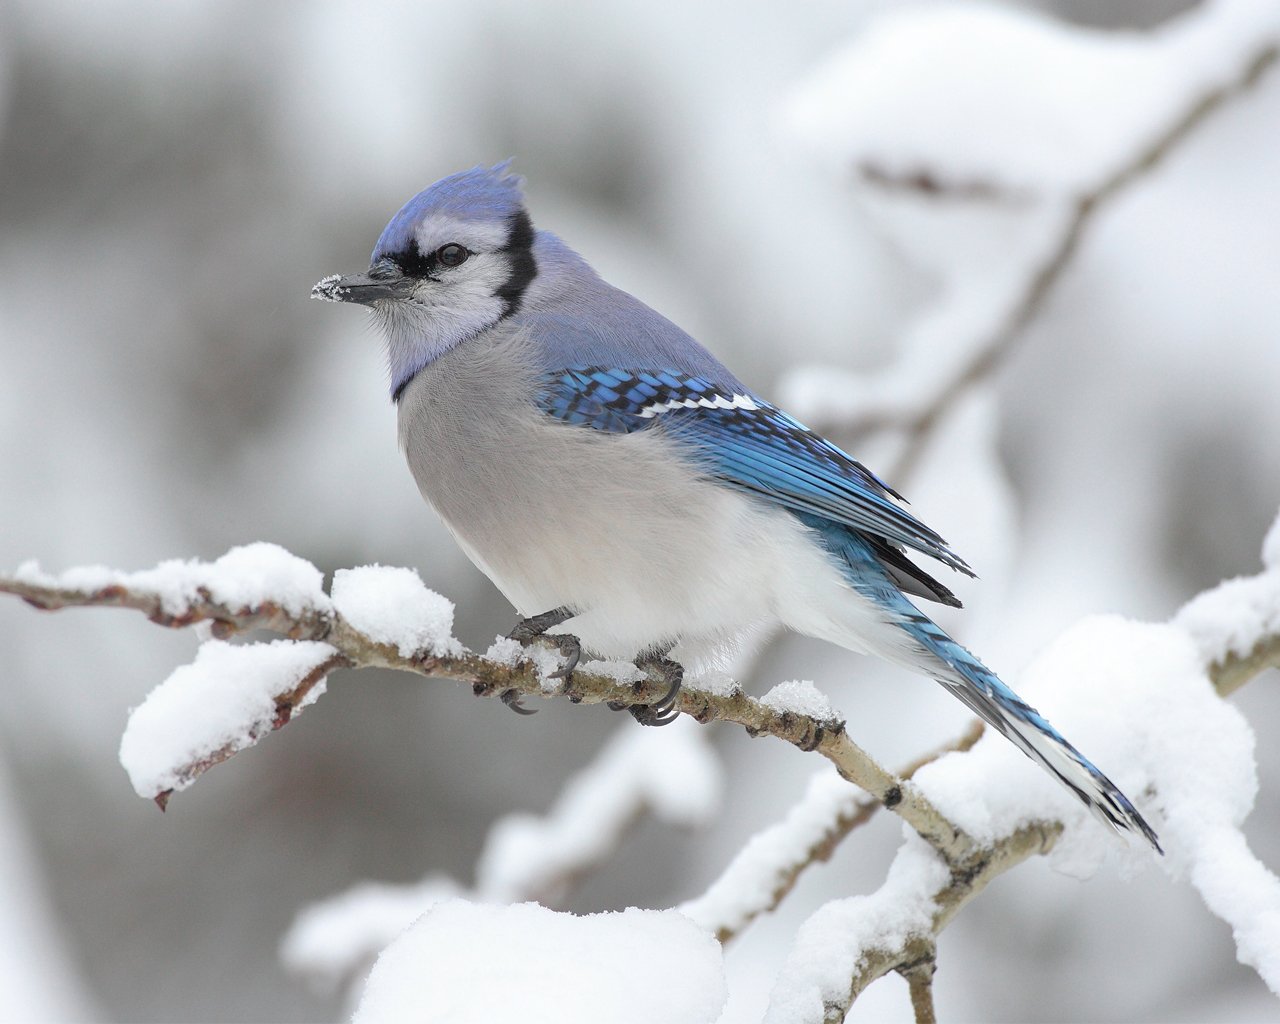 To download click on Winter Snow Bird Desktop Wallpaper then choose